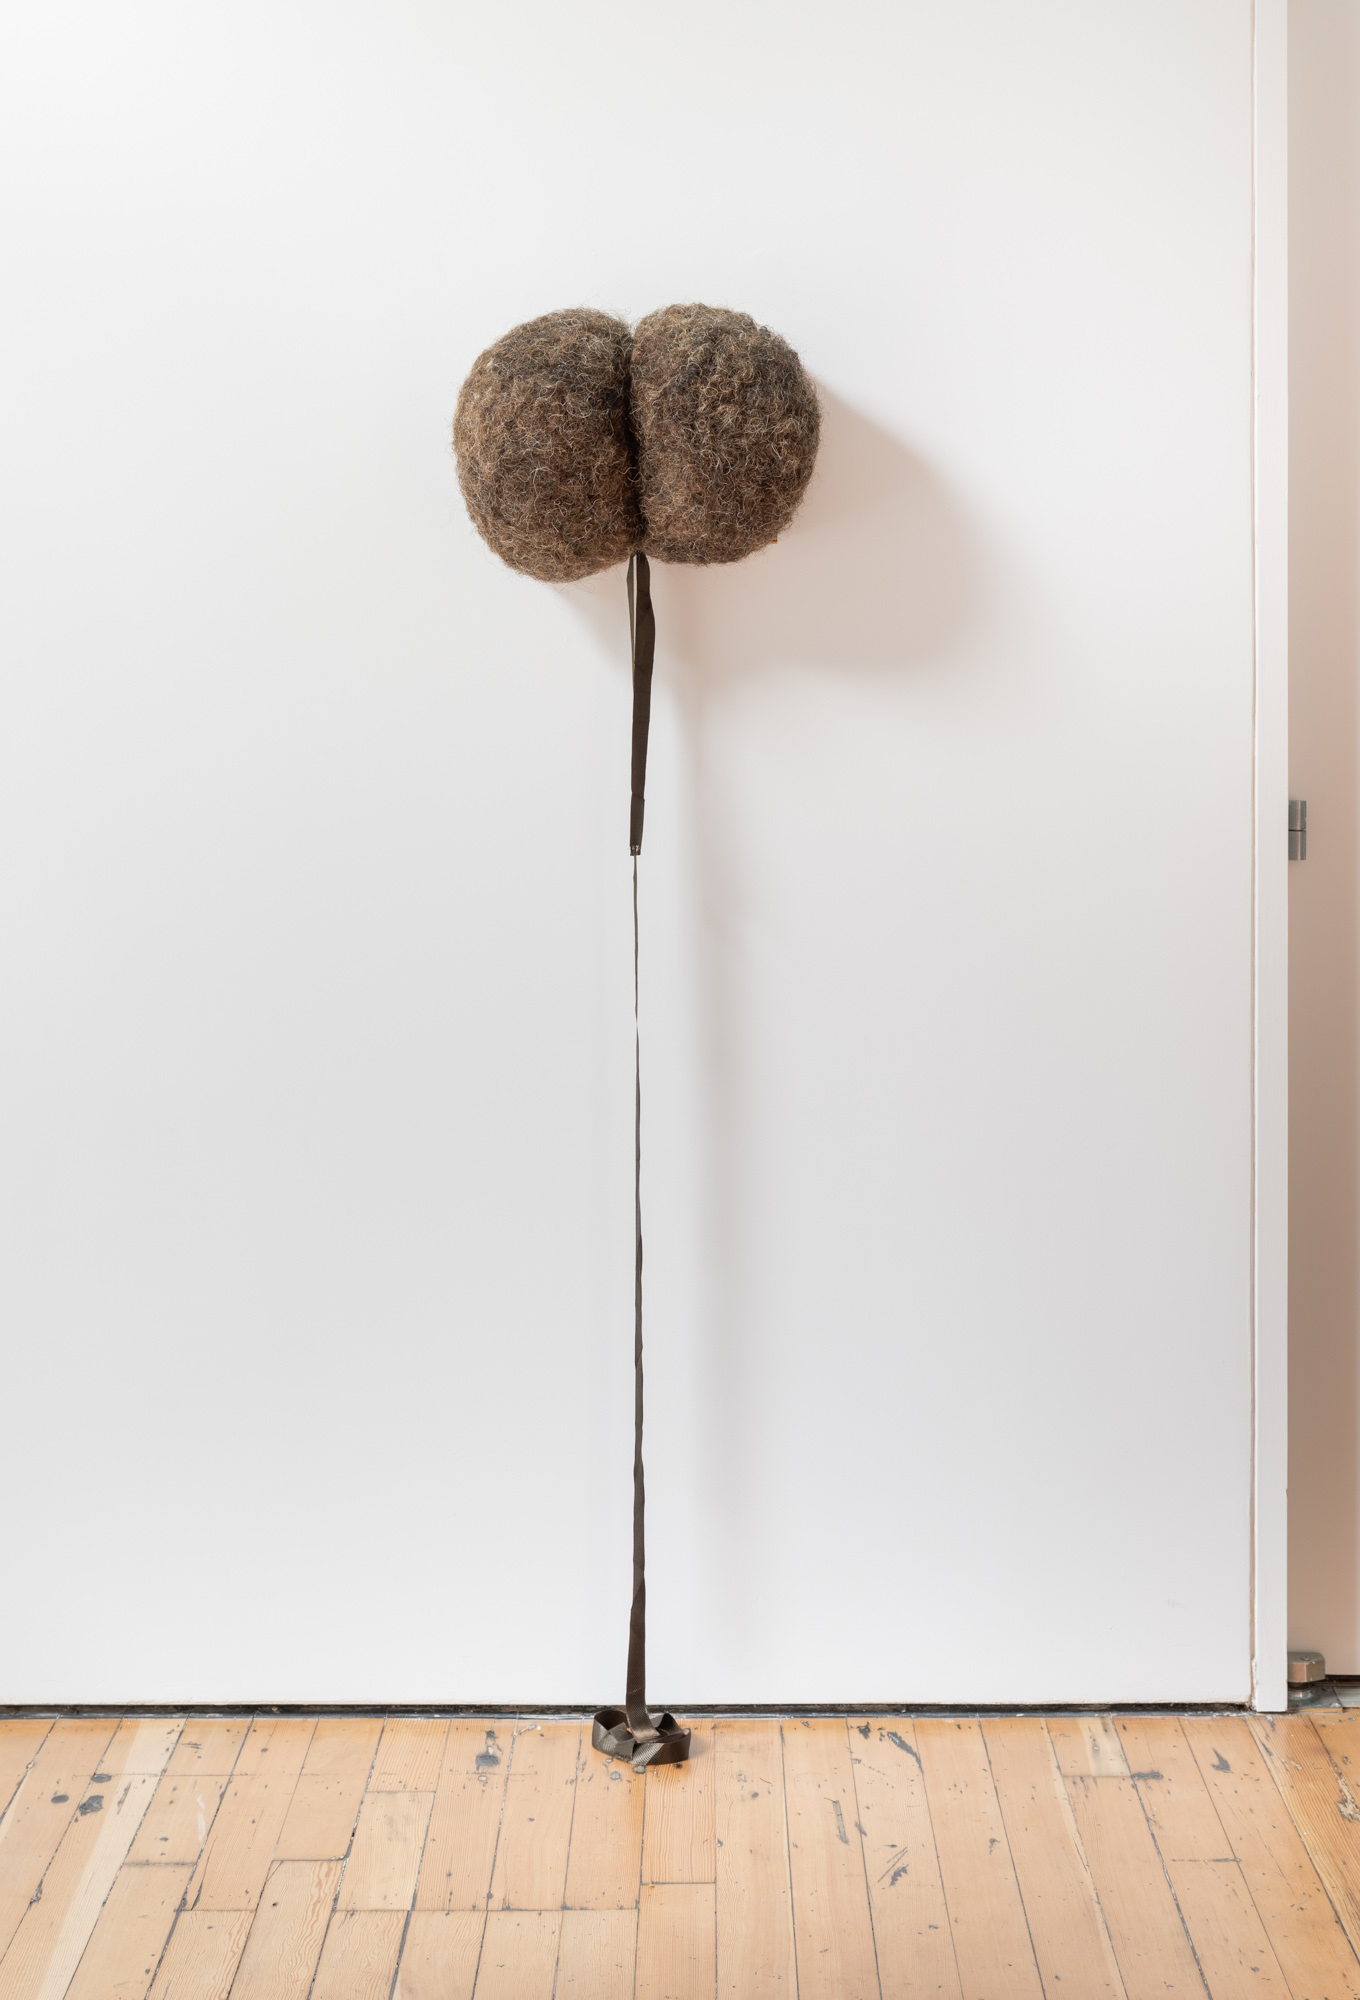 Mona Kowalska, Untitled, 2021, horsehair, wood, cotton, 84 x 18 x 10 inches